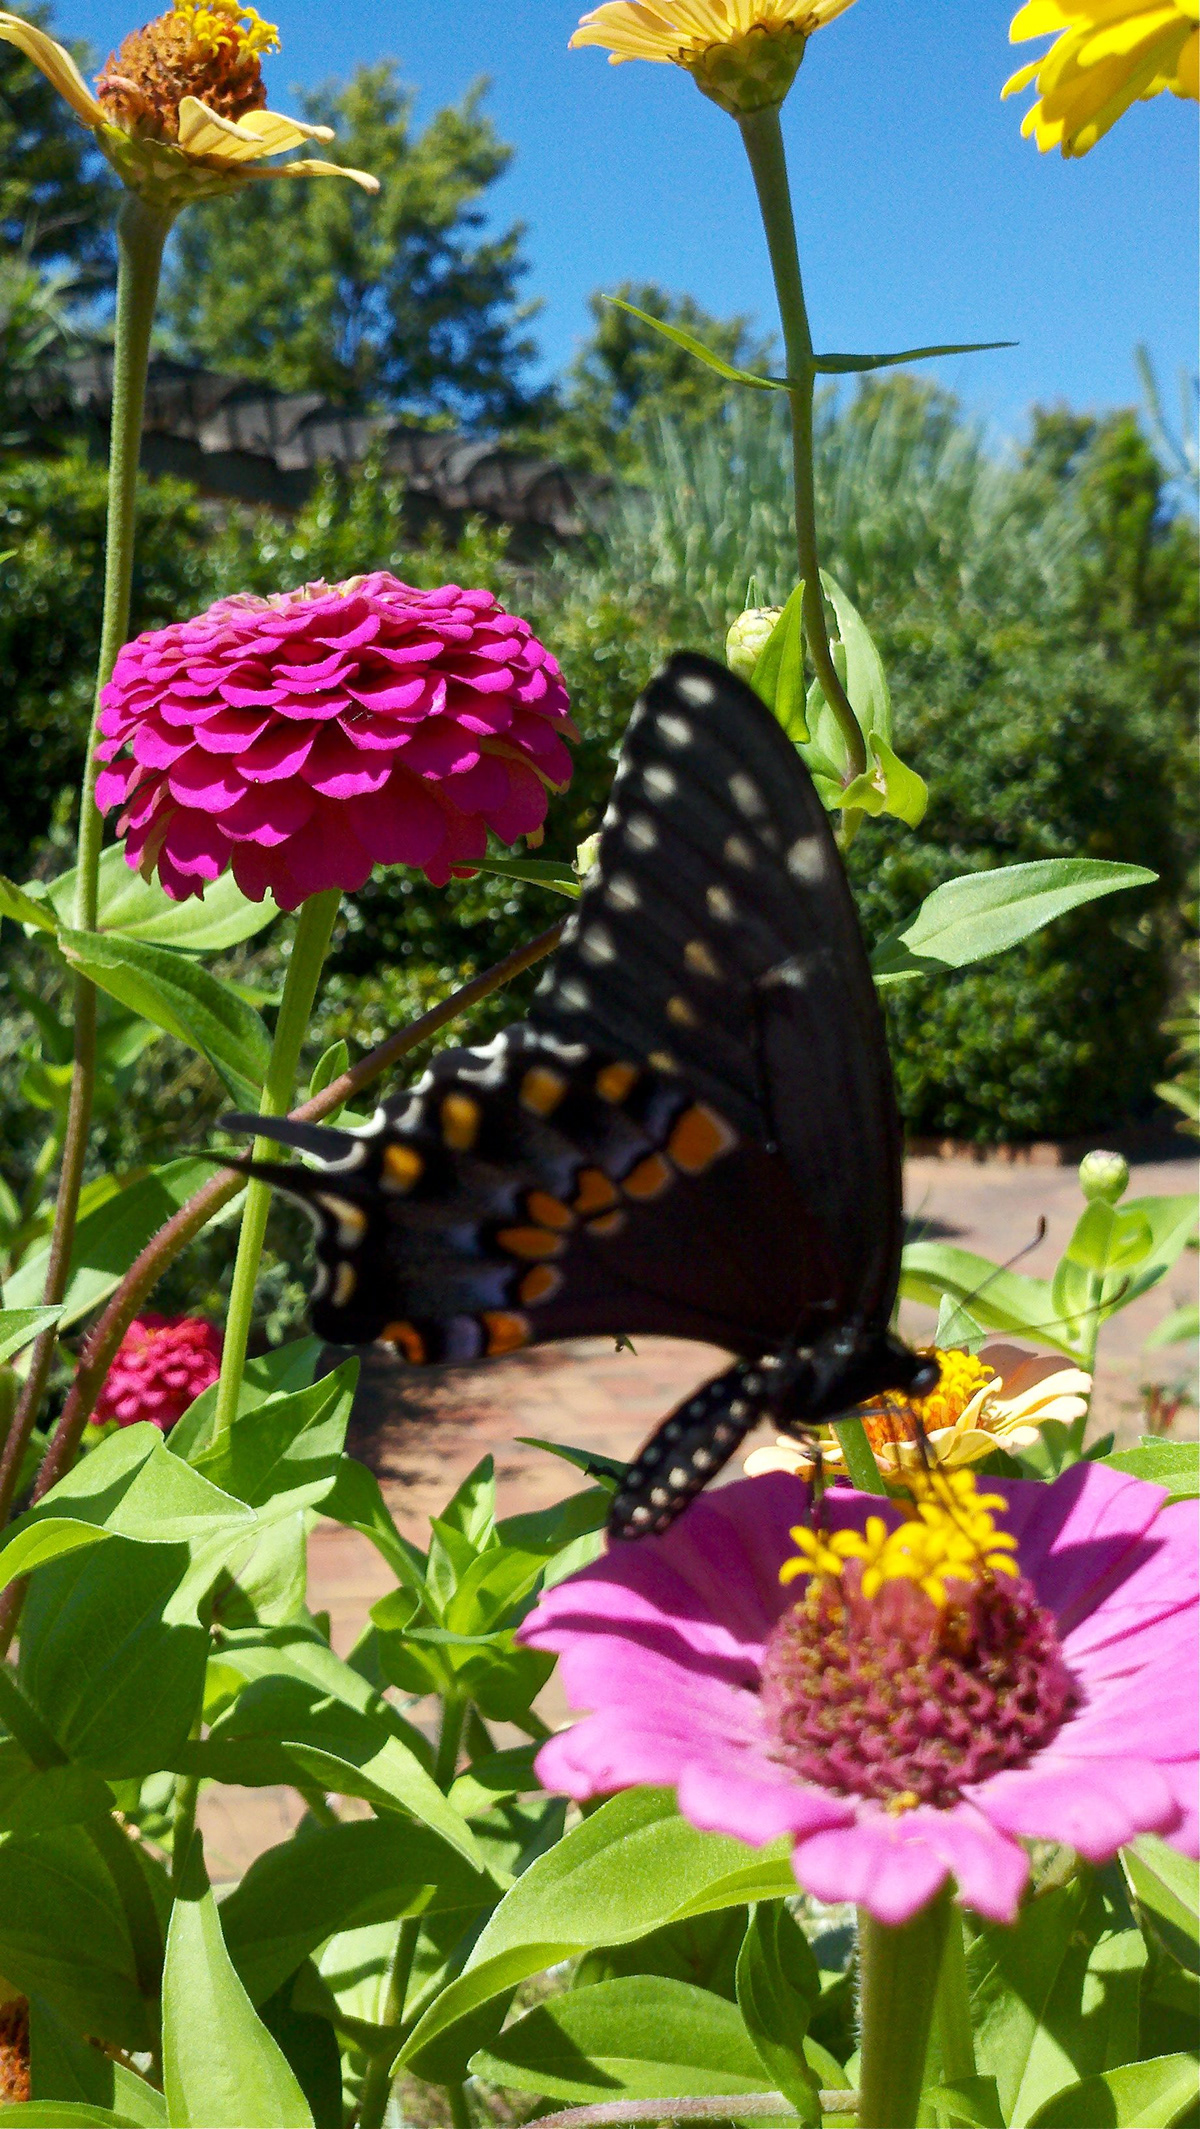 north carolina botanical gardens butterflies Flowers green leaf gerber Roses leaves bugs purple yellow pink